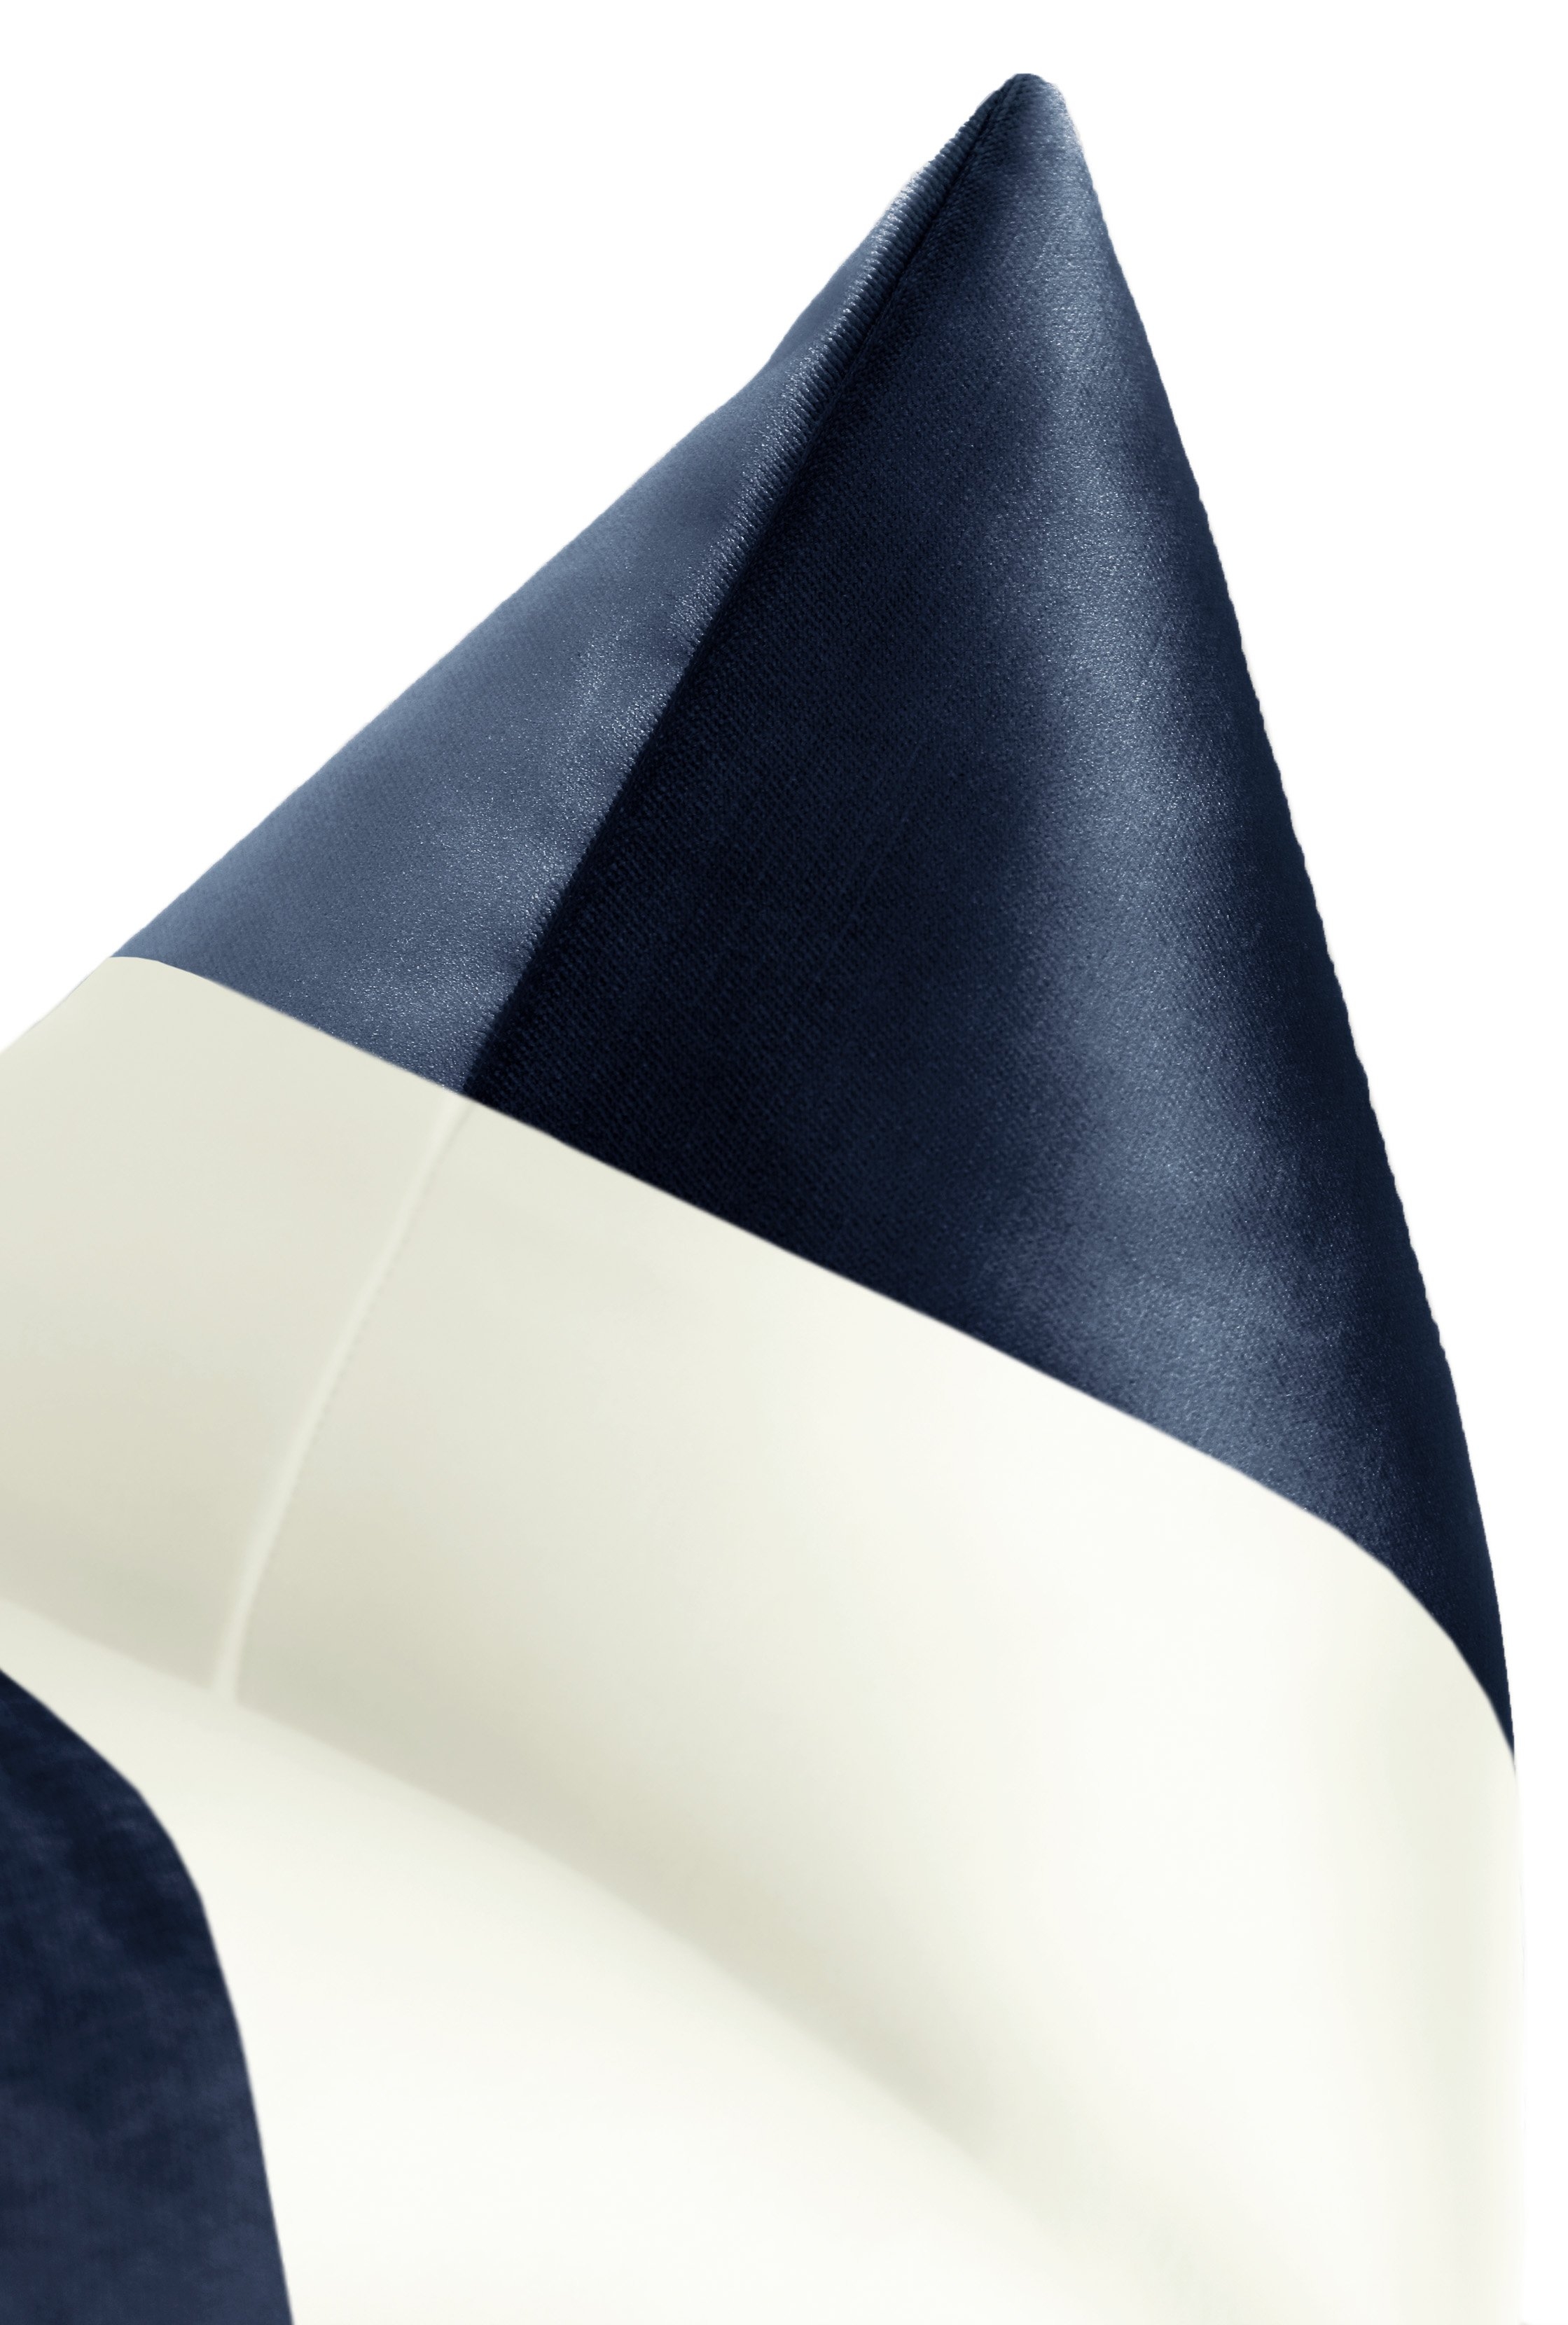 PANEL COLORBLOCK :: FAUX SILK VELVET // NAVY BLUE + ALABASTER SILK - LITTLE LUMBAR 12" X 18" - Image 1